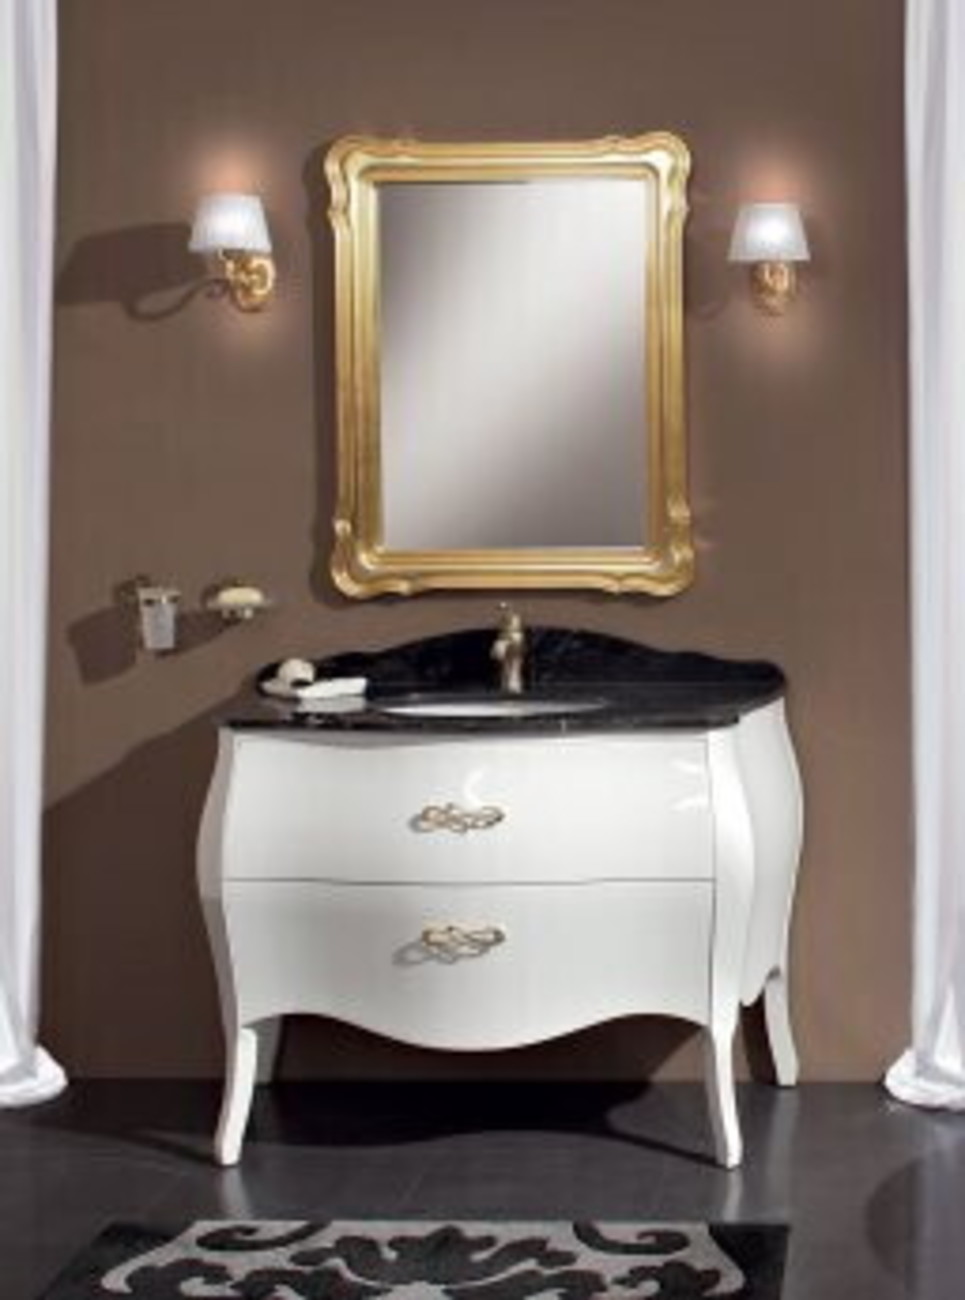 Cezares EMMA Bianco Laccato Lucido Комплект мебели с 2 ящиками (Тумба+ Мраморная столешницa+ Керамическая раковина+ Зеркало+ Светильники)